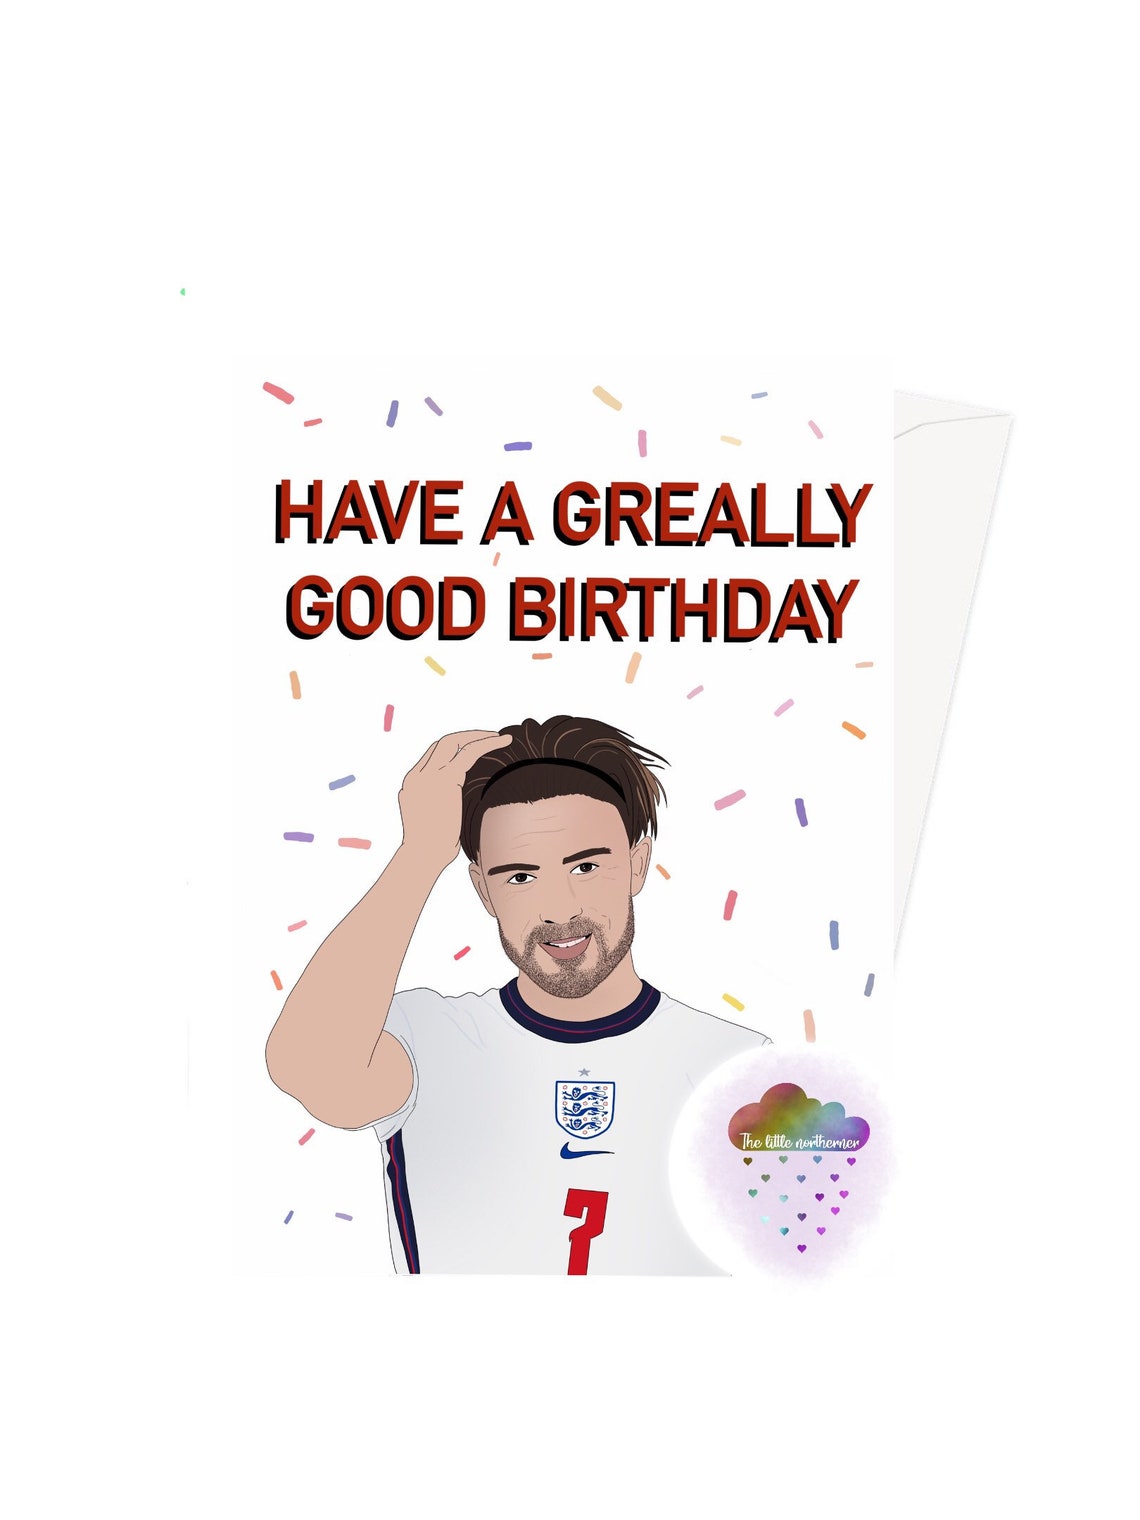 Jack grealish birthday card a6 greally good football England | Etsy